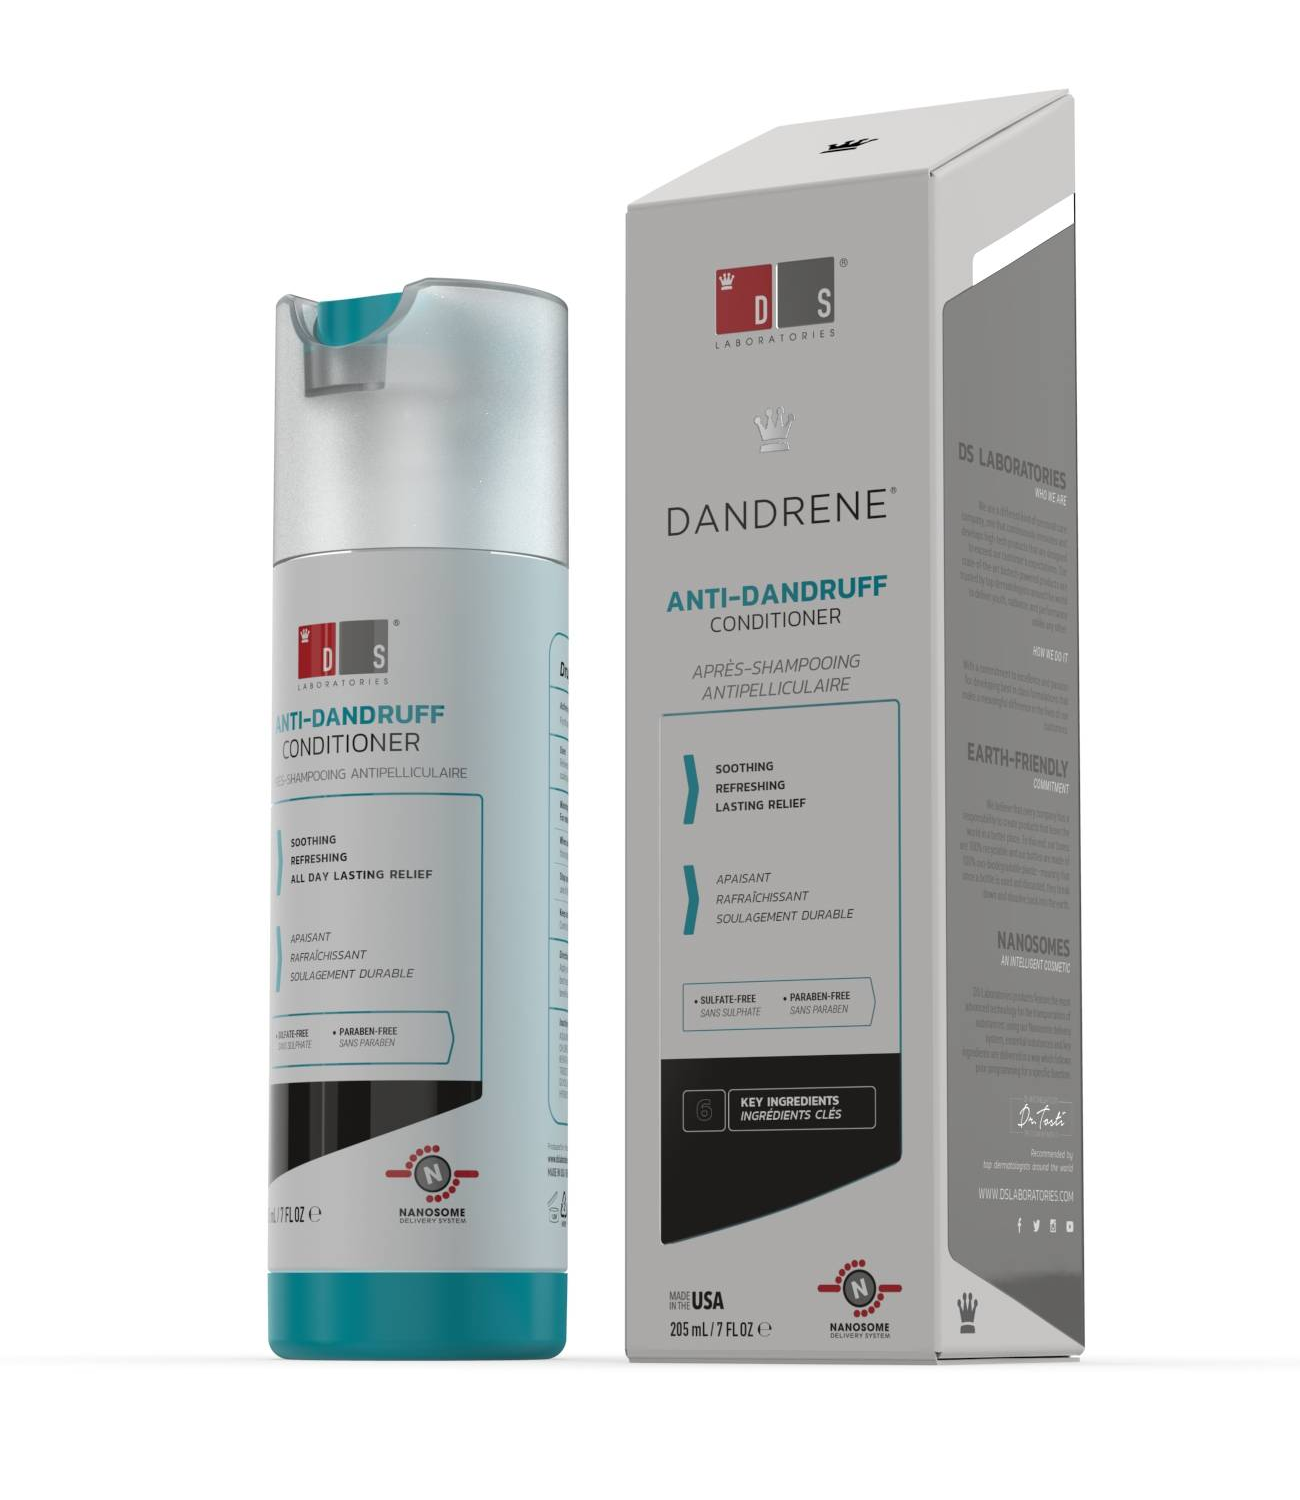 Dandrene | Exfoliating Anti-Dandruff Conditioner